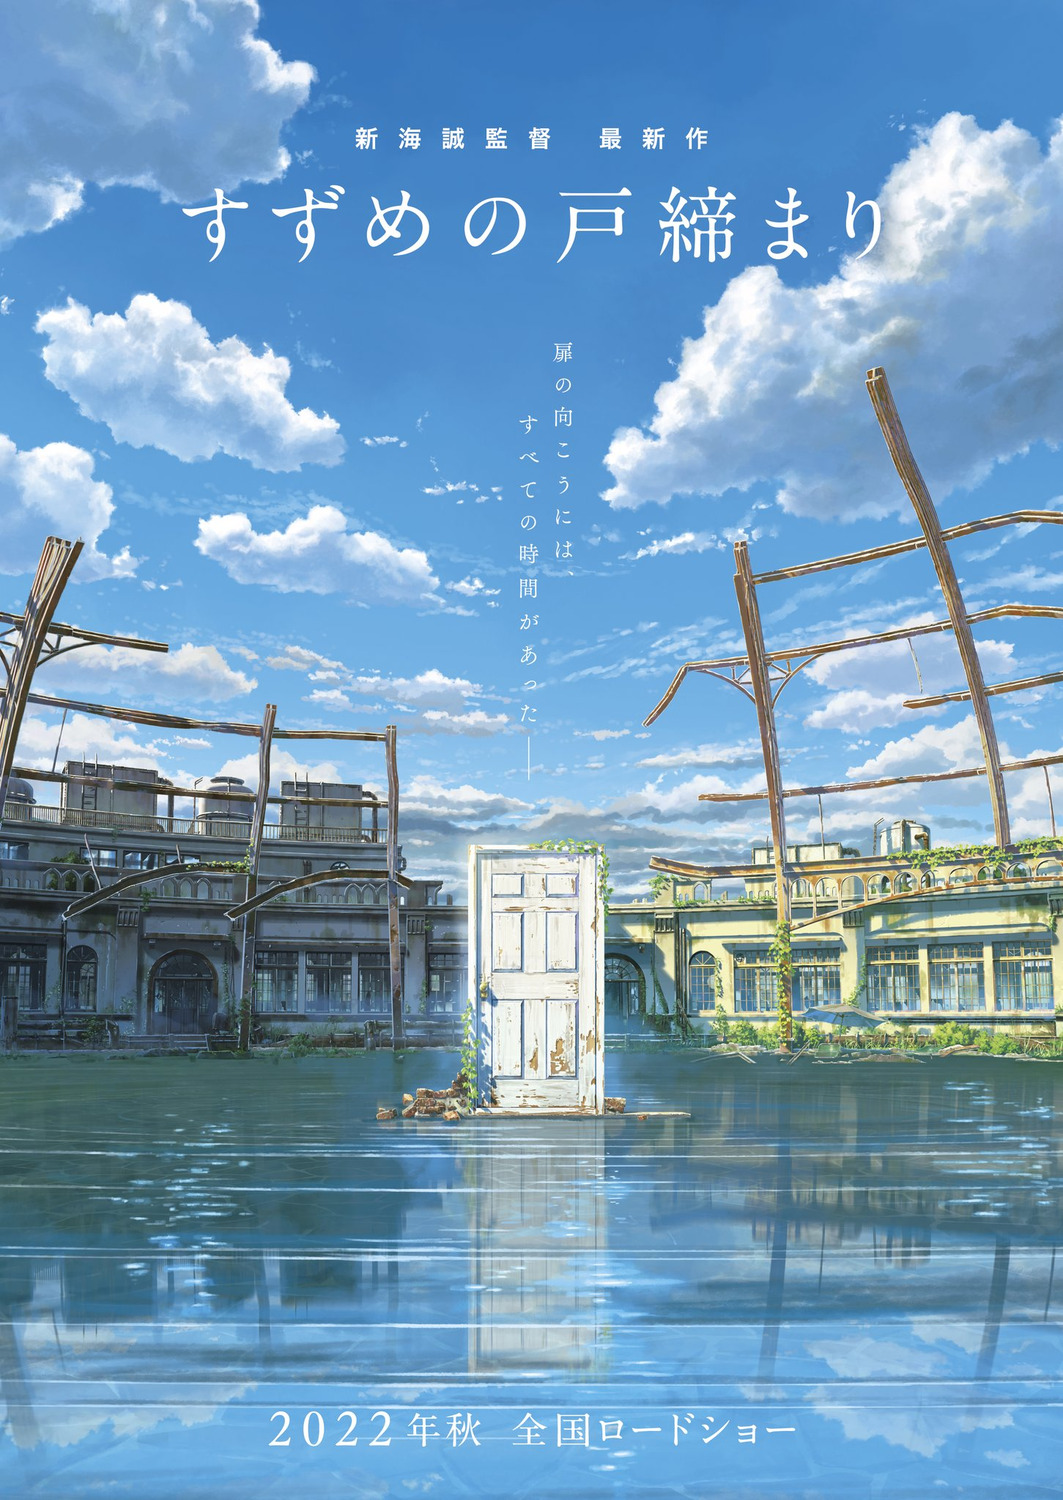 Extra Large Movie Poster Image for Suzume no tojimari 